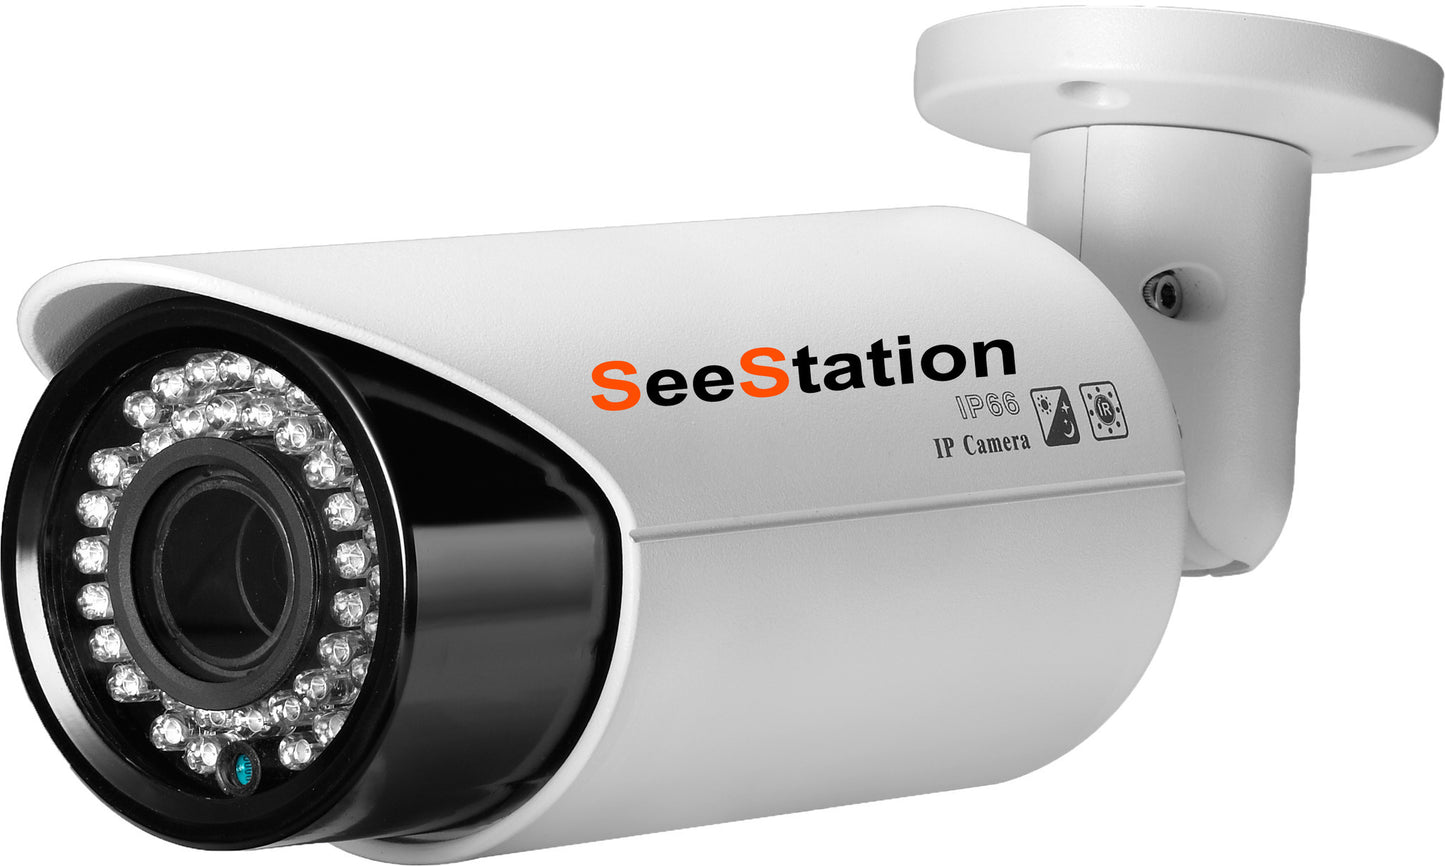 SeeStation (IP) CIP1220V-4W IP Bullet Camera 2MP IR POE ONVIF 2.8-12mm Varifocal HD Lens